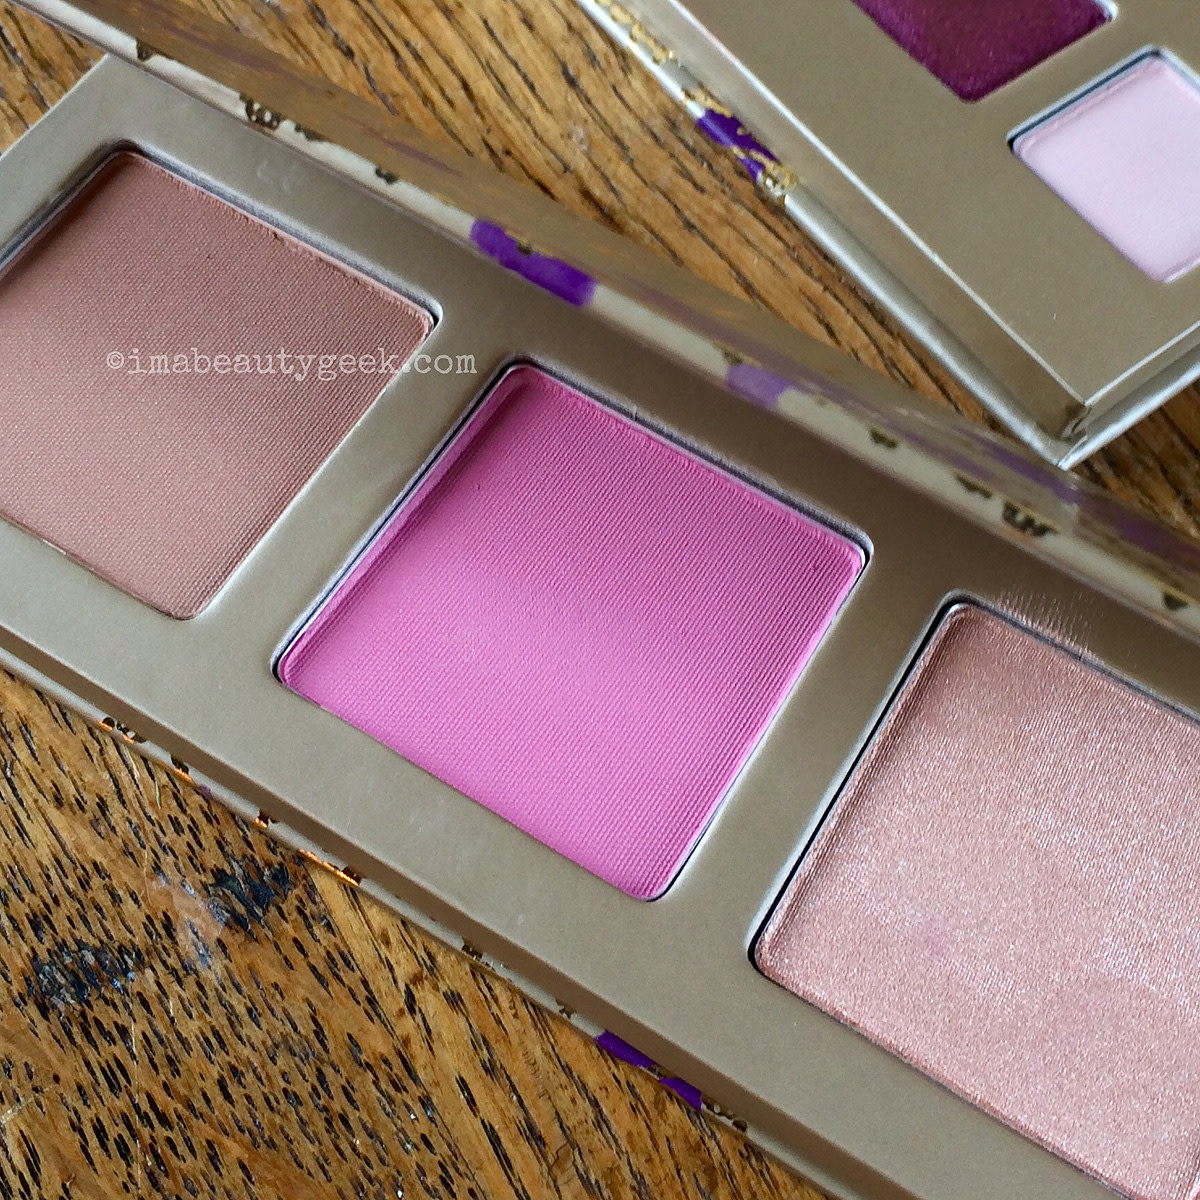 stila holiday 2015_sending my love gift set blush palette